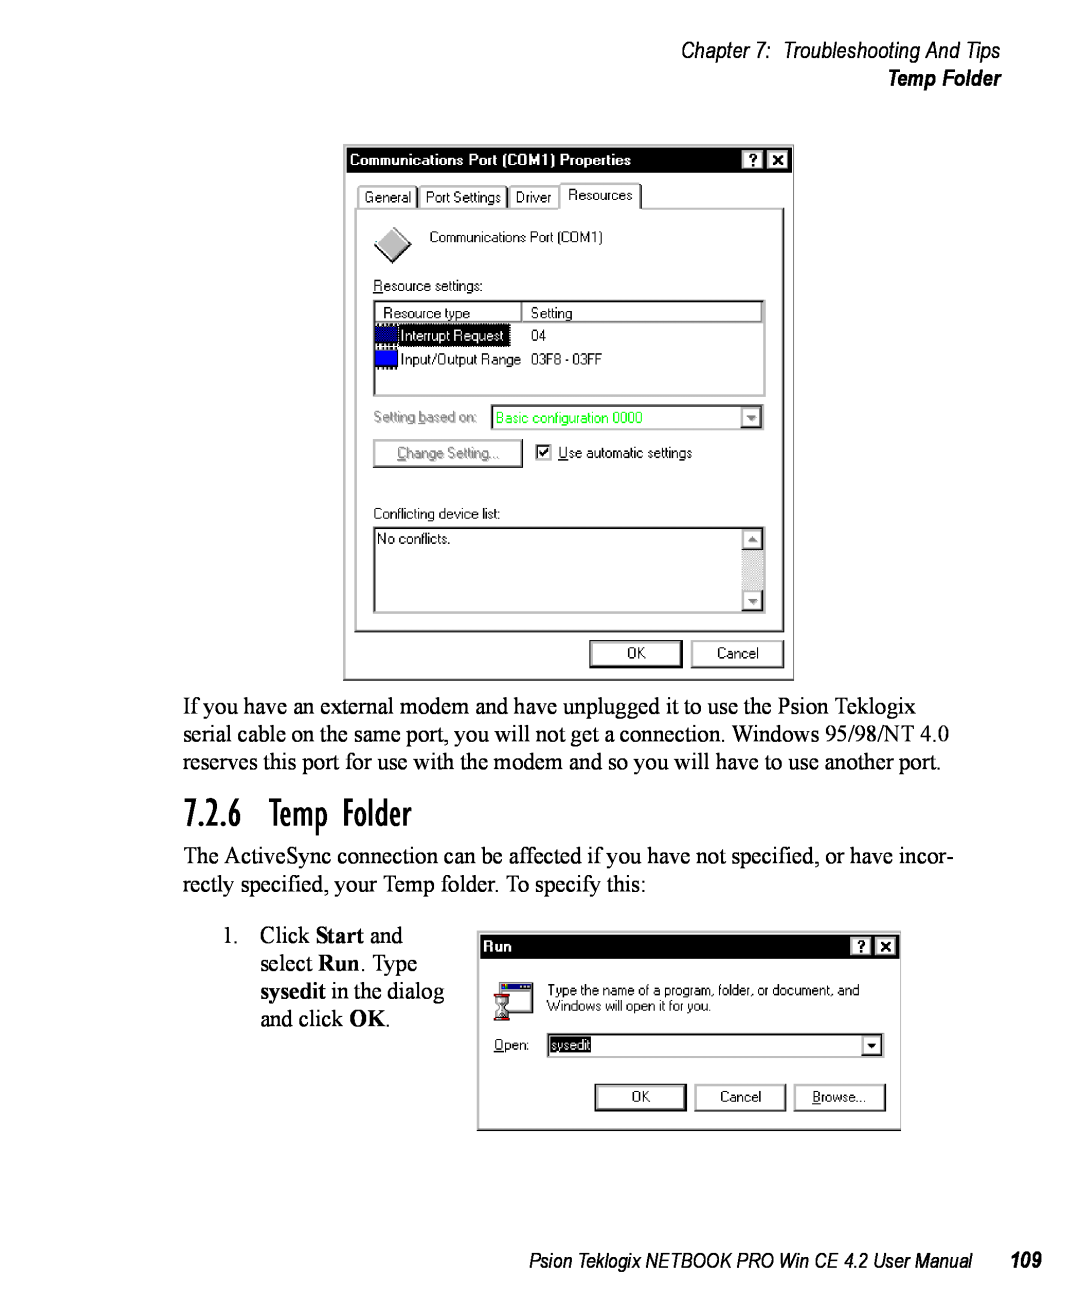 Psion Teklogix Win CE 4.2 user manual Temp Folder, Troubleshooting And Tips 